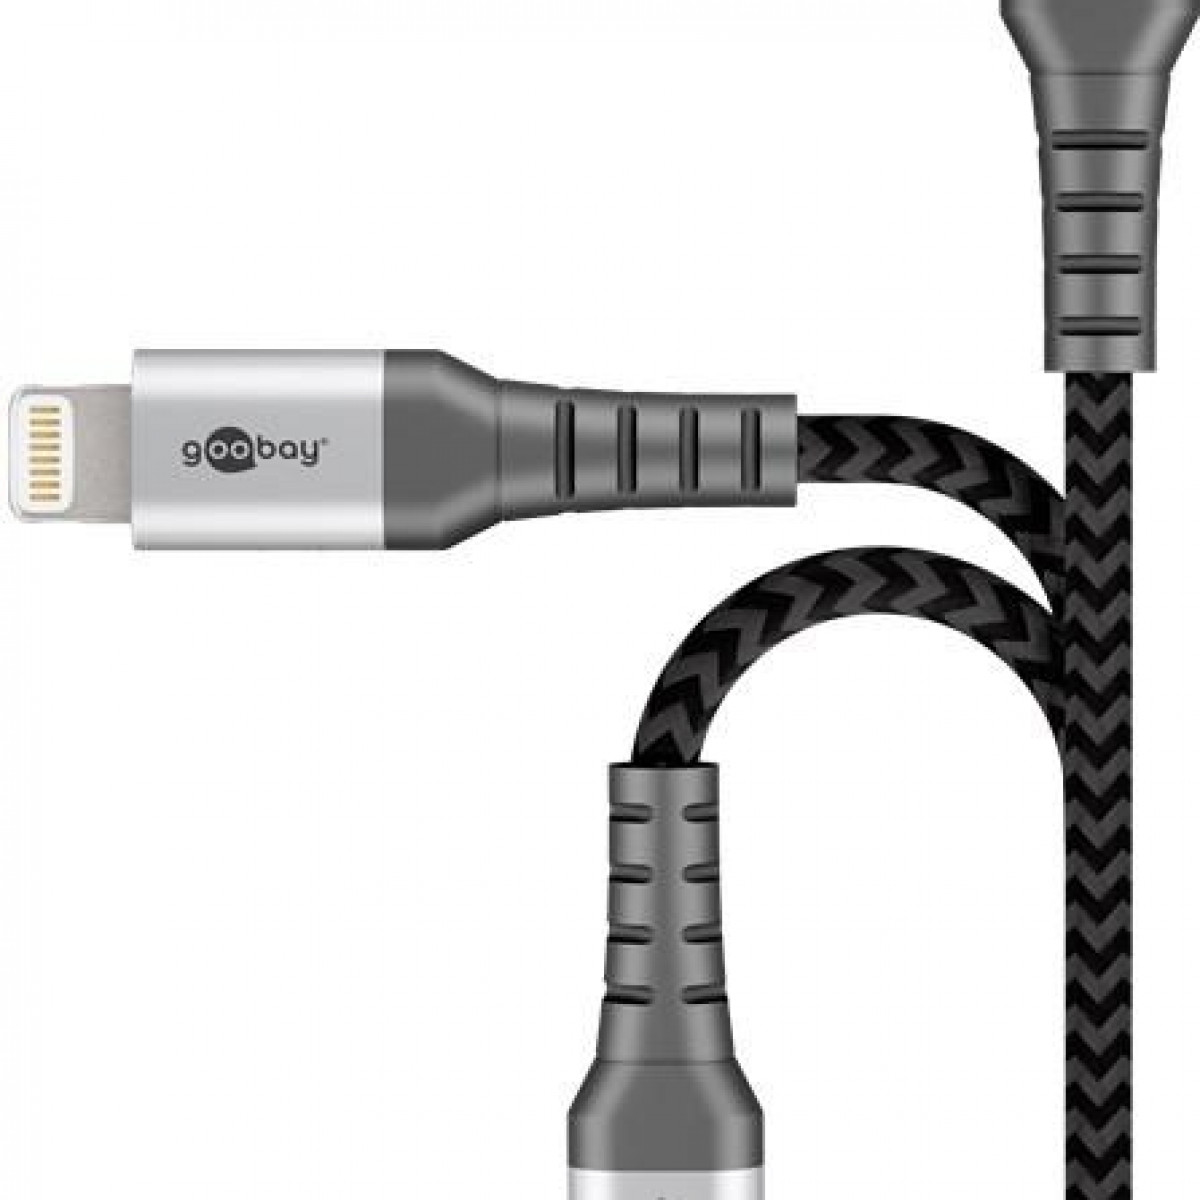 auf mit 0,5 kabel, GOOBAY Lightning m Lightning (spacegrau/silber), Textilkabel Metallsteckern USB-A